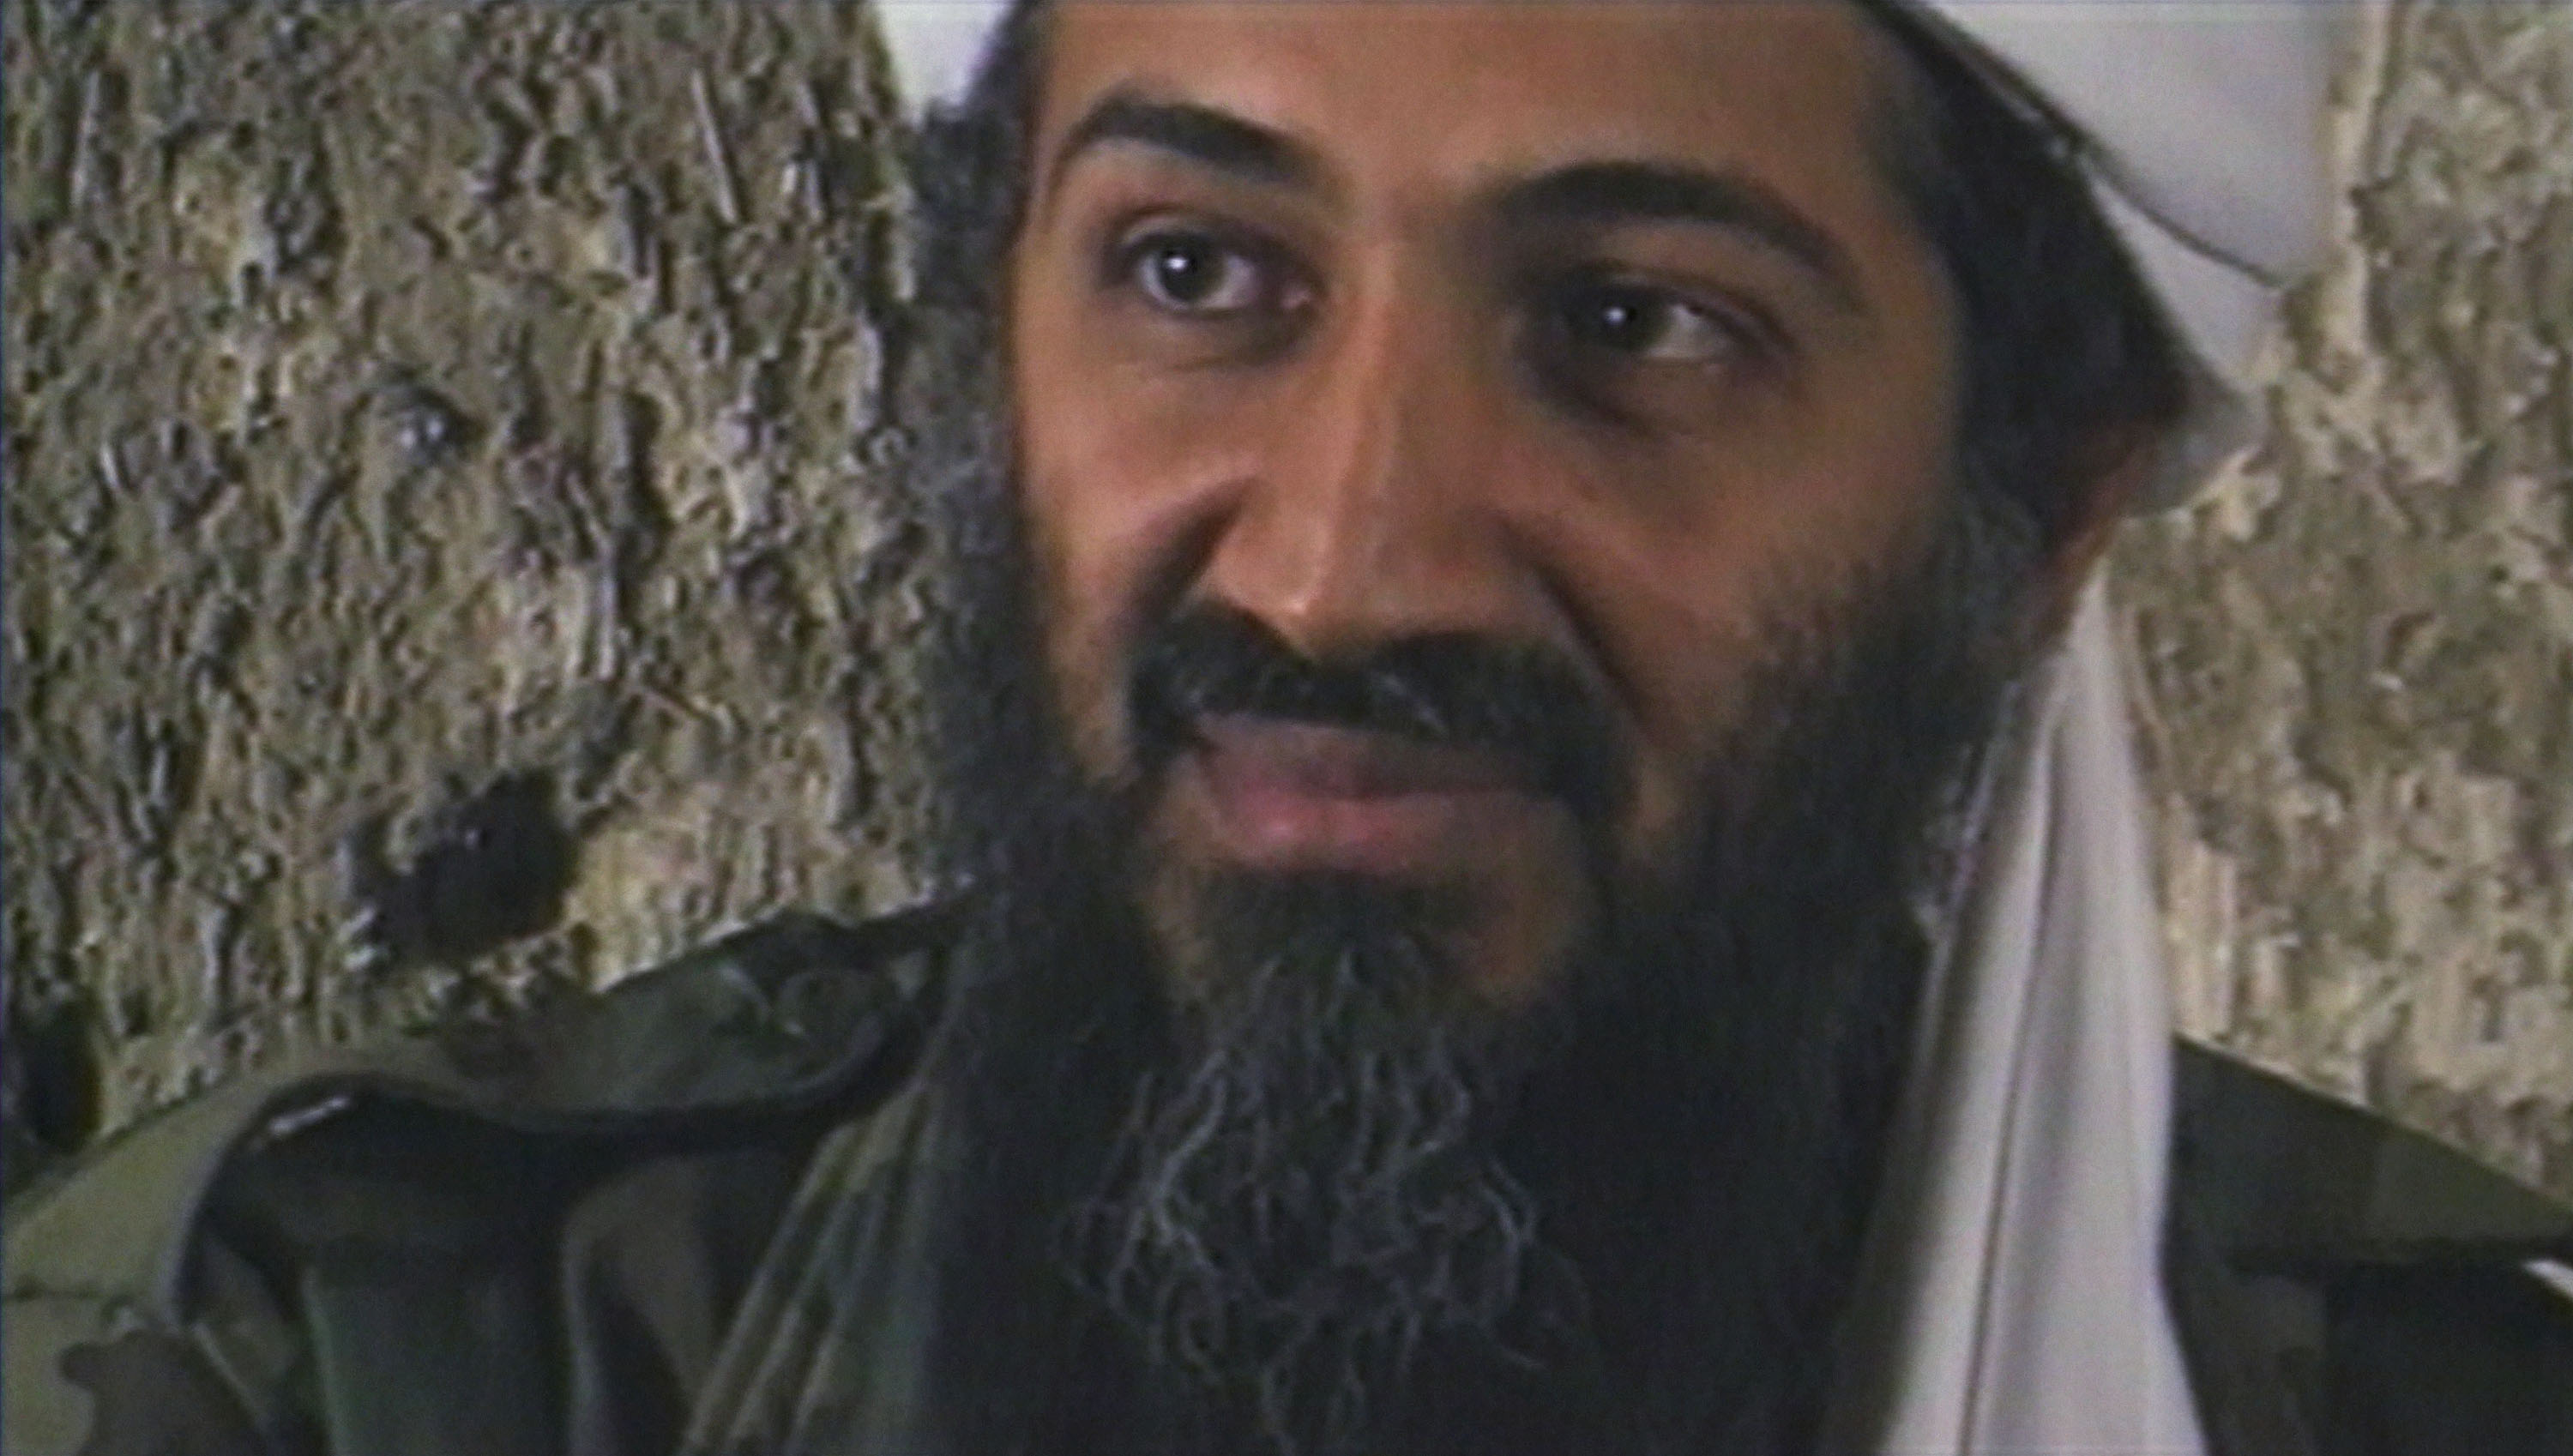 Bin Porn - Osama bin Laden Might Have Used Porn to Communicate - InsideHook